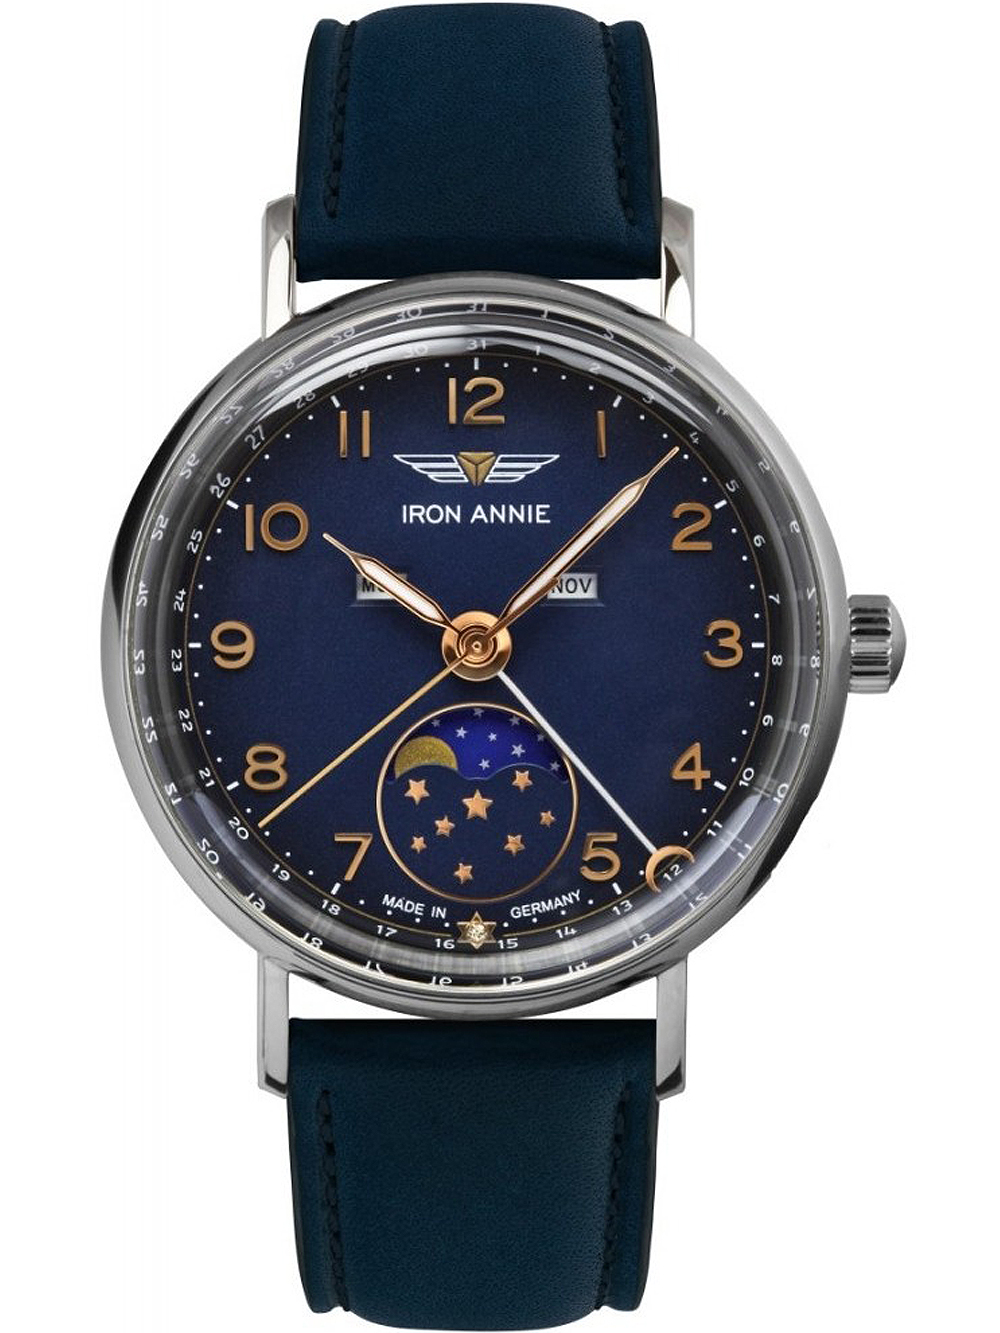 Dámské hodinky Iron Annie 5977-4 Amazonas ladies Quartz Moon Phase 36 mm